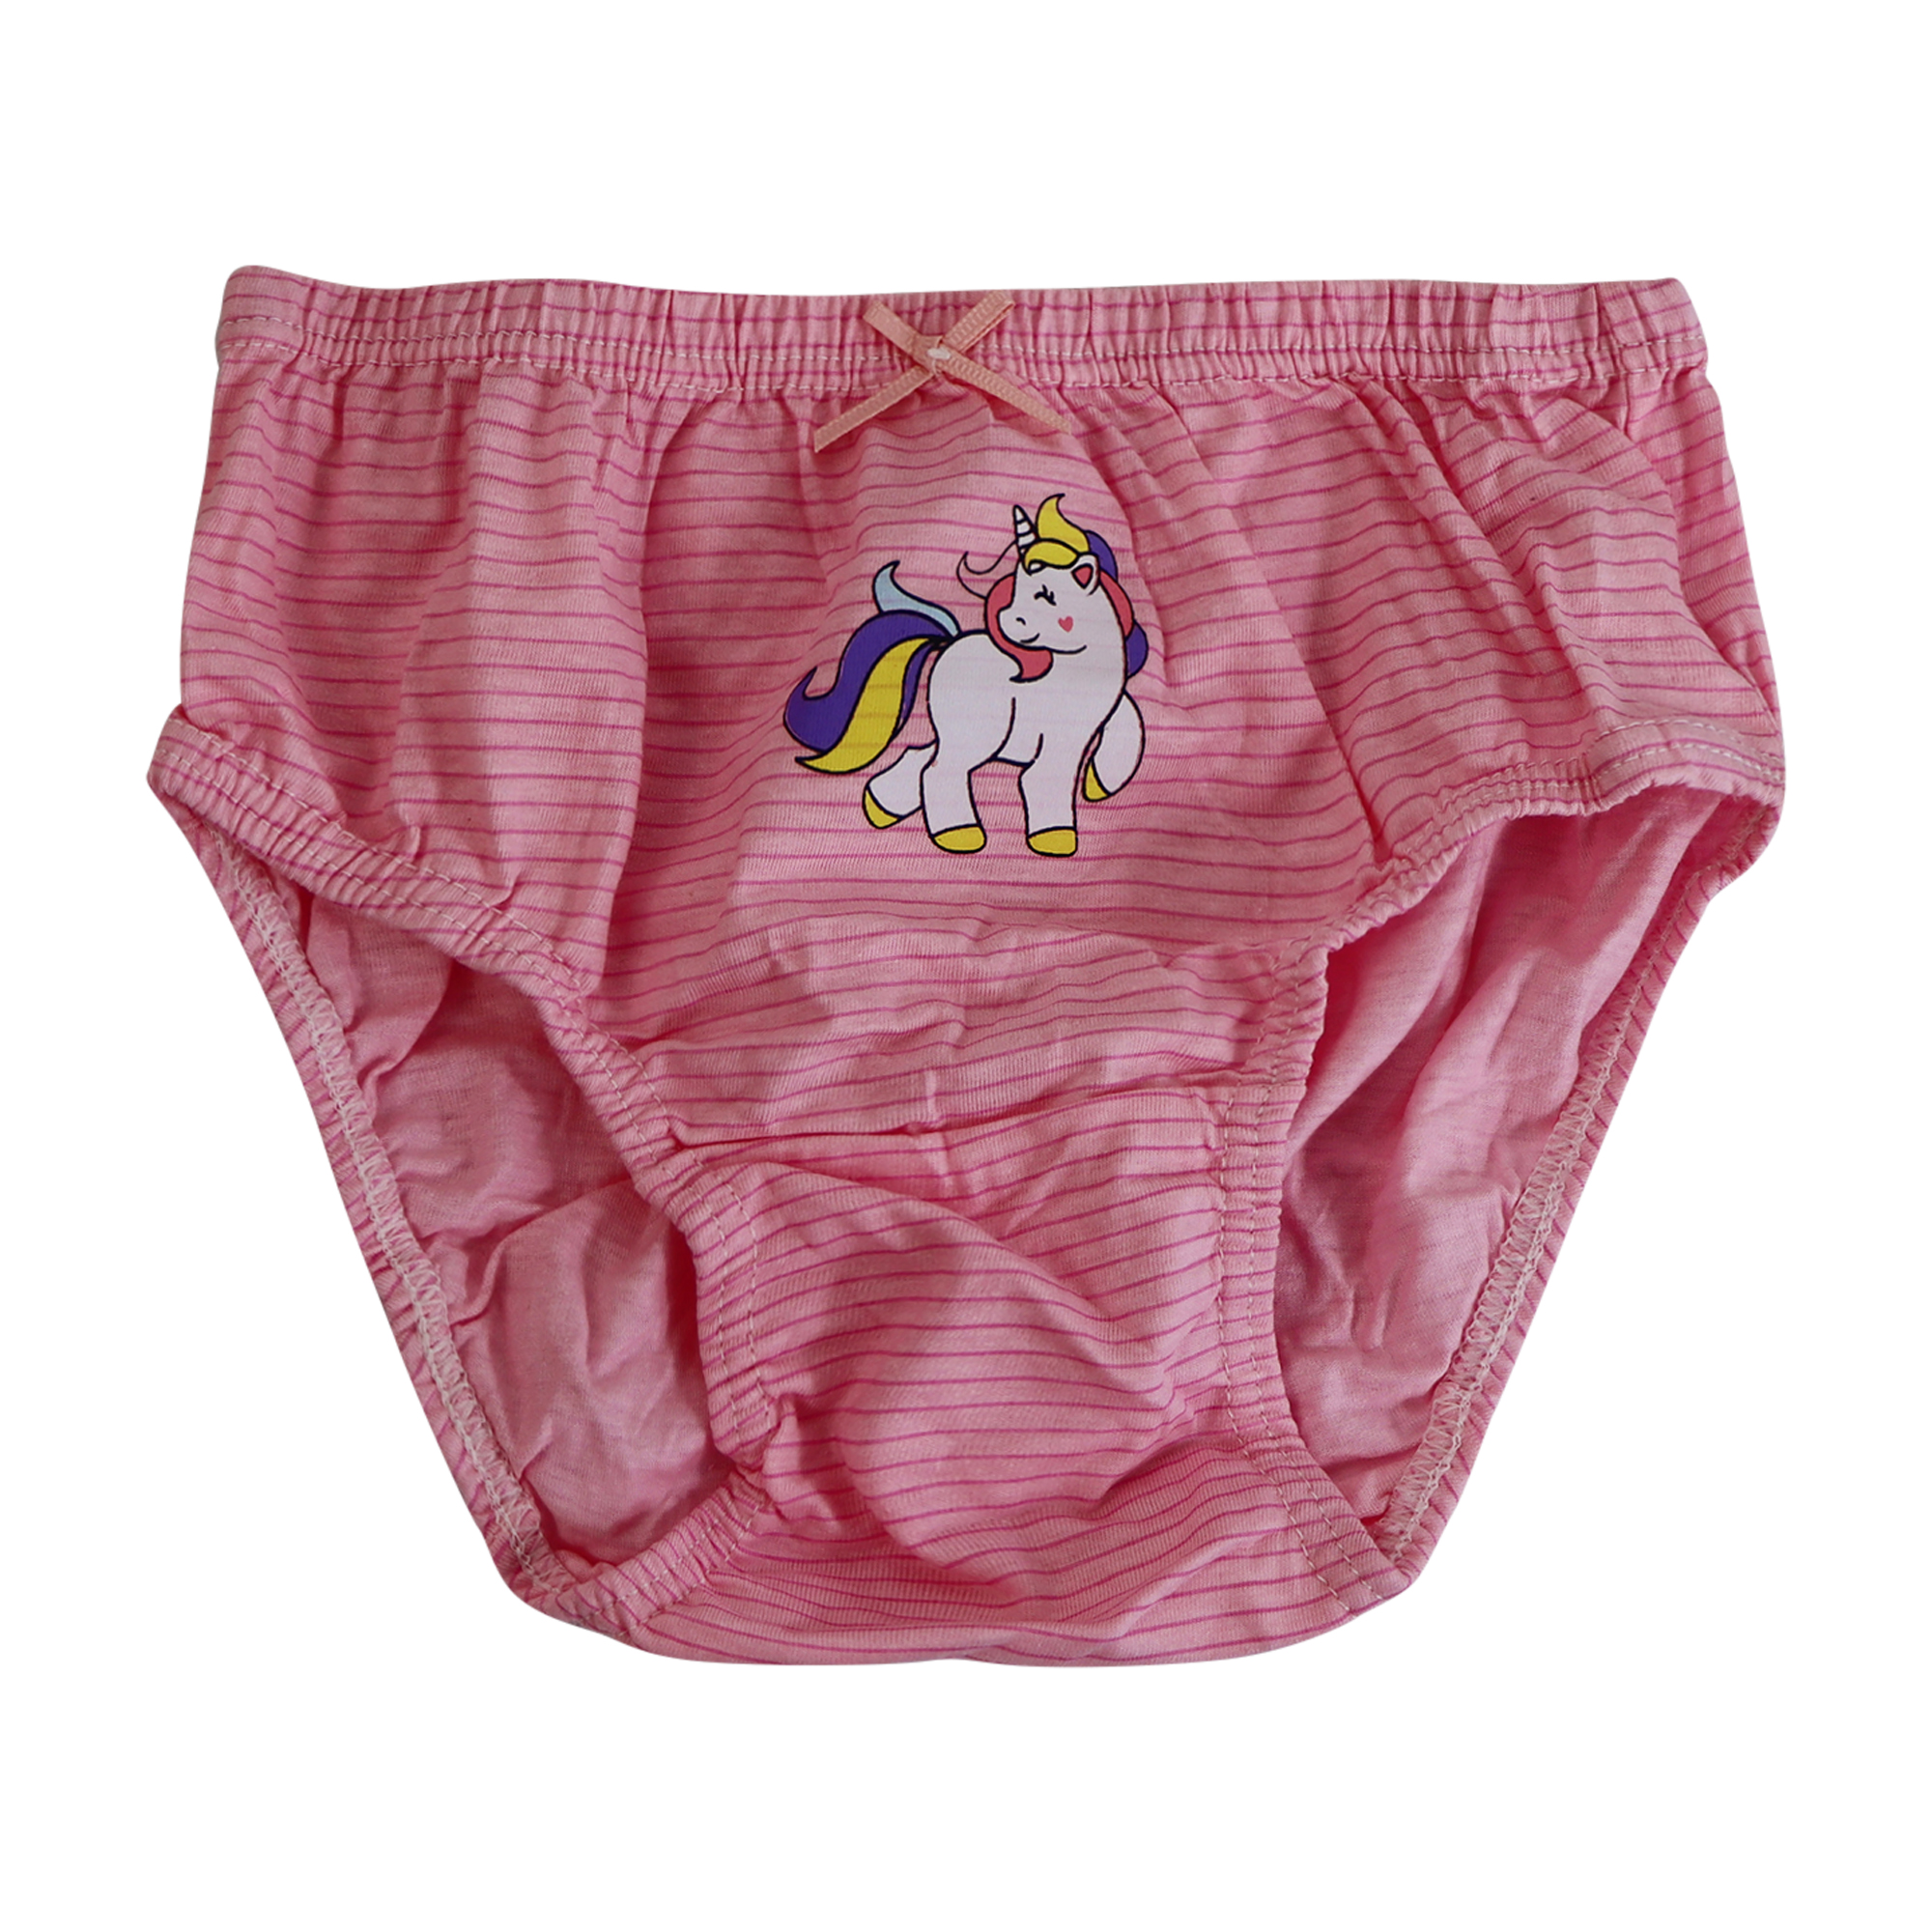  My Little Pony Girls' Unicorn Underwear Pack of 5 Size